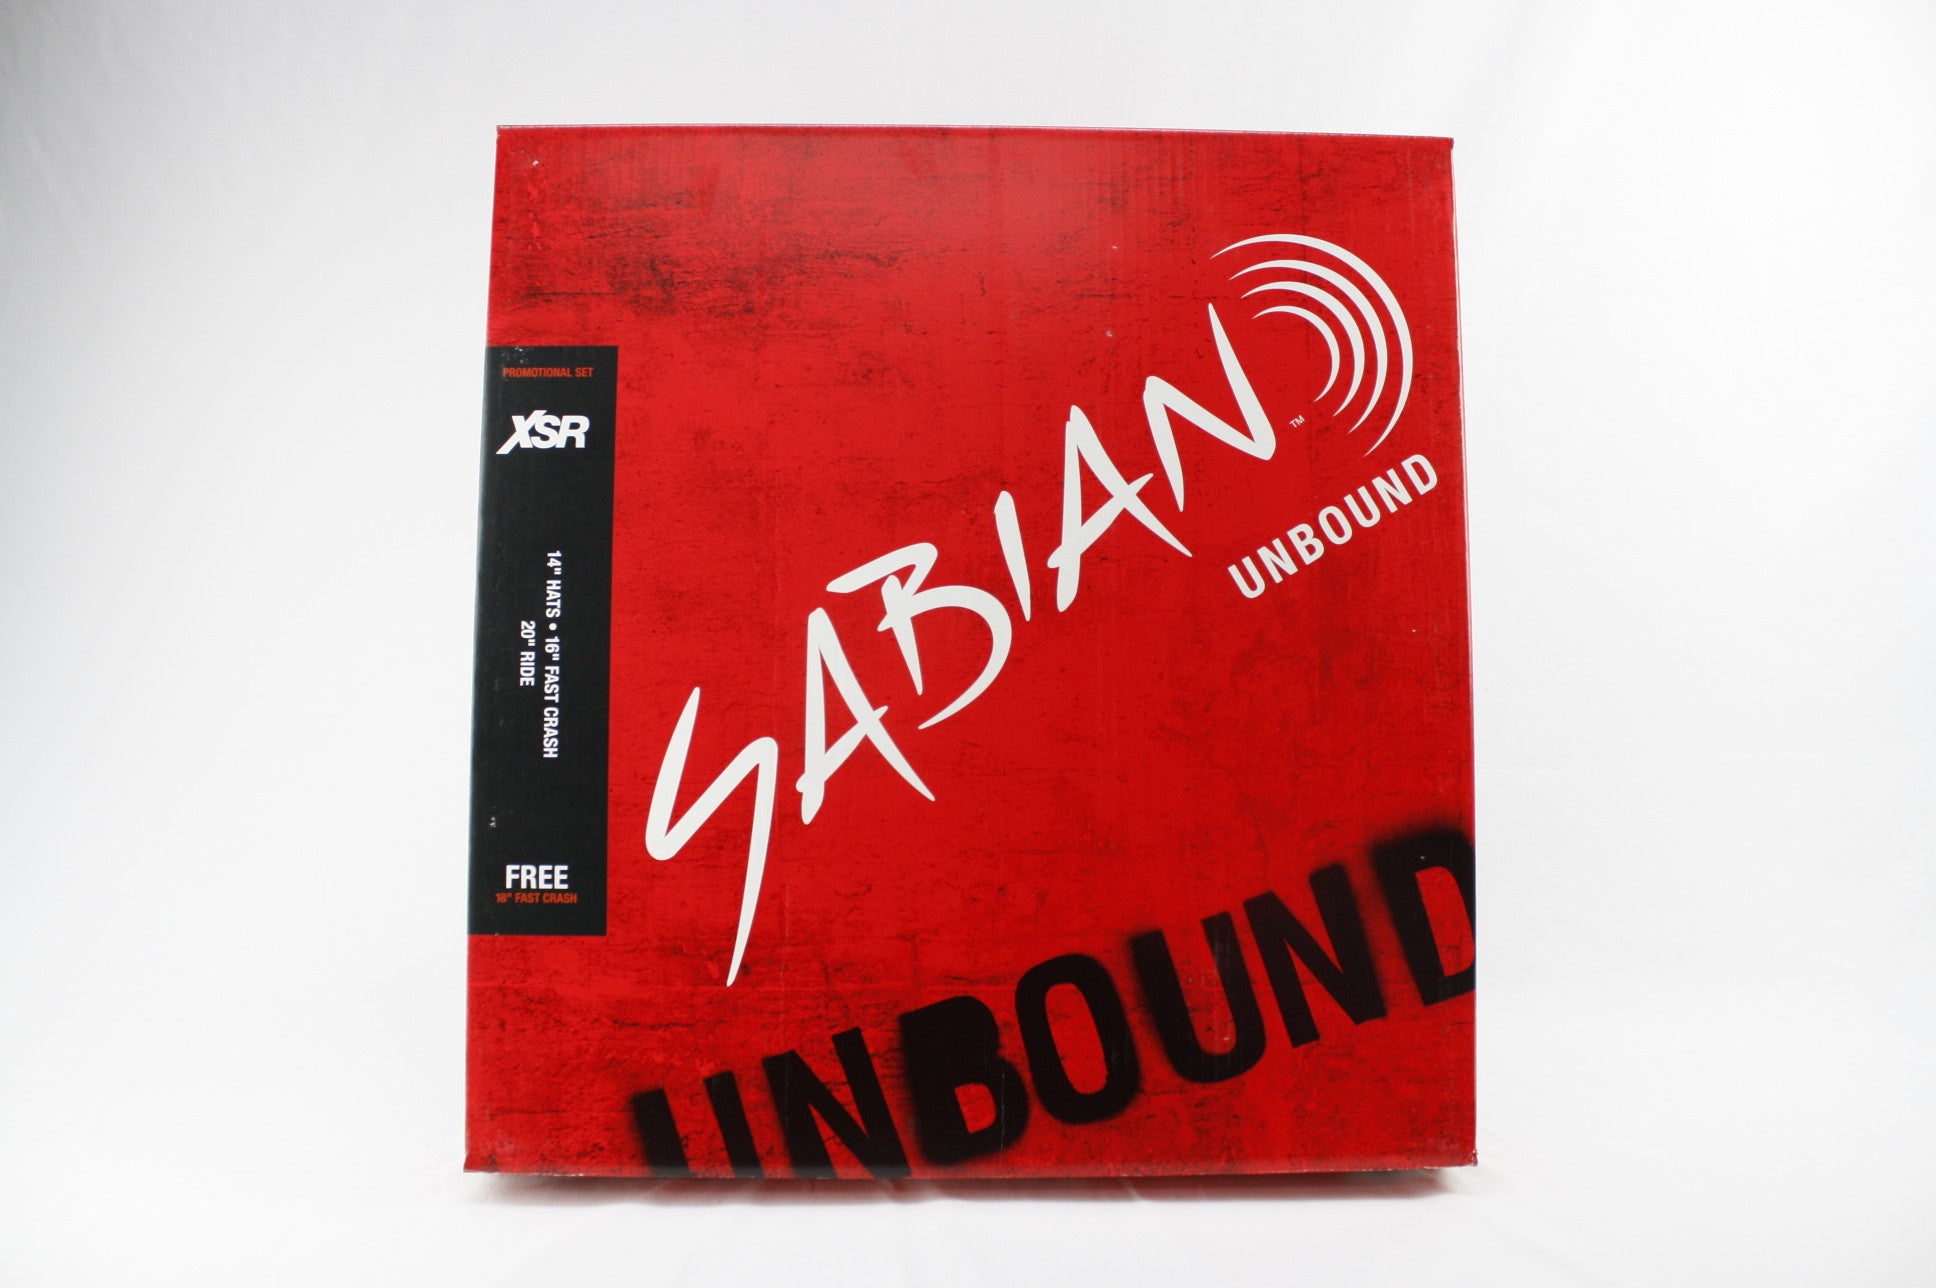 Sabian XSR Promotional Set Cymbal Kit w/ Free 18" Crash XSR5005GB